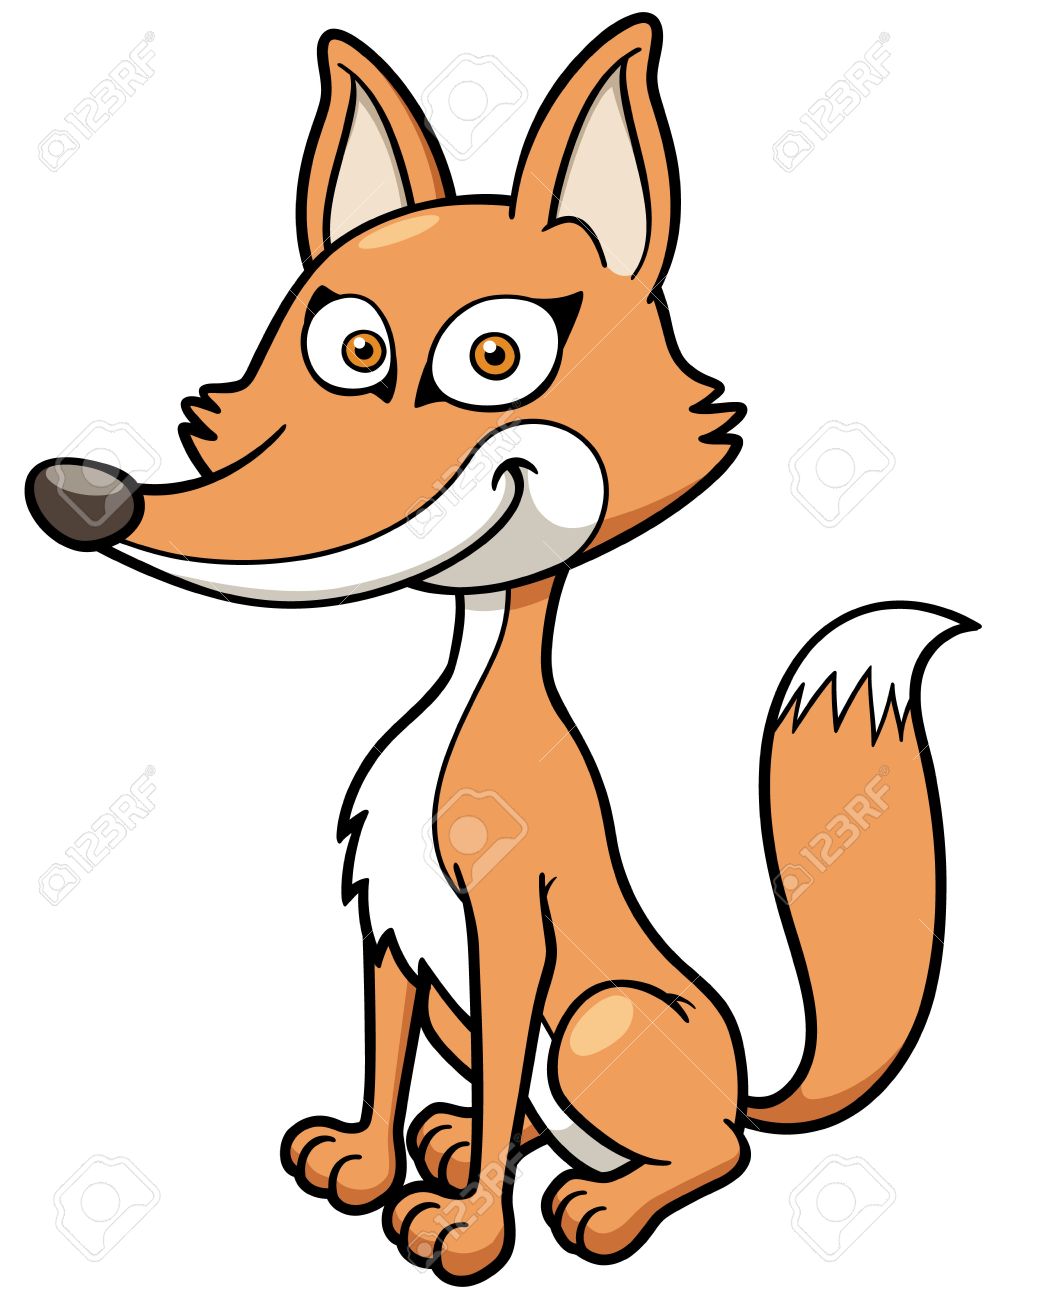 nose clipart fox